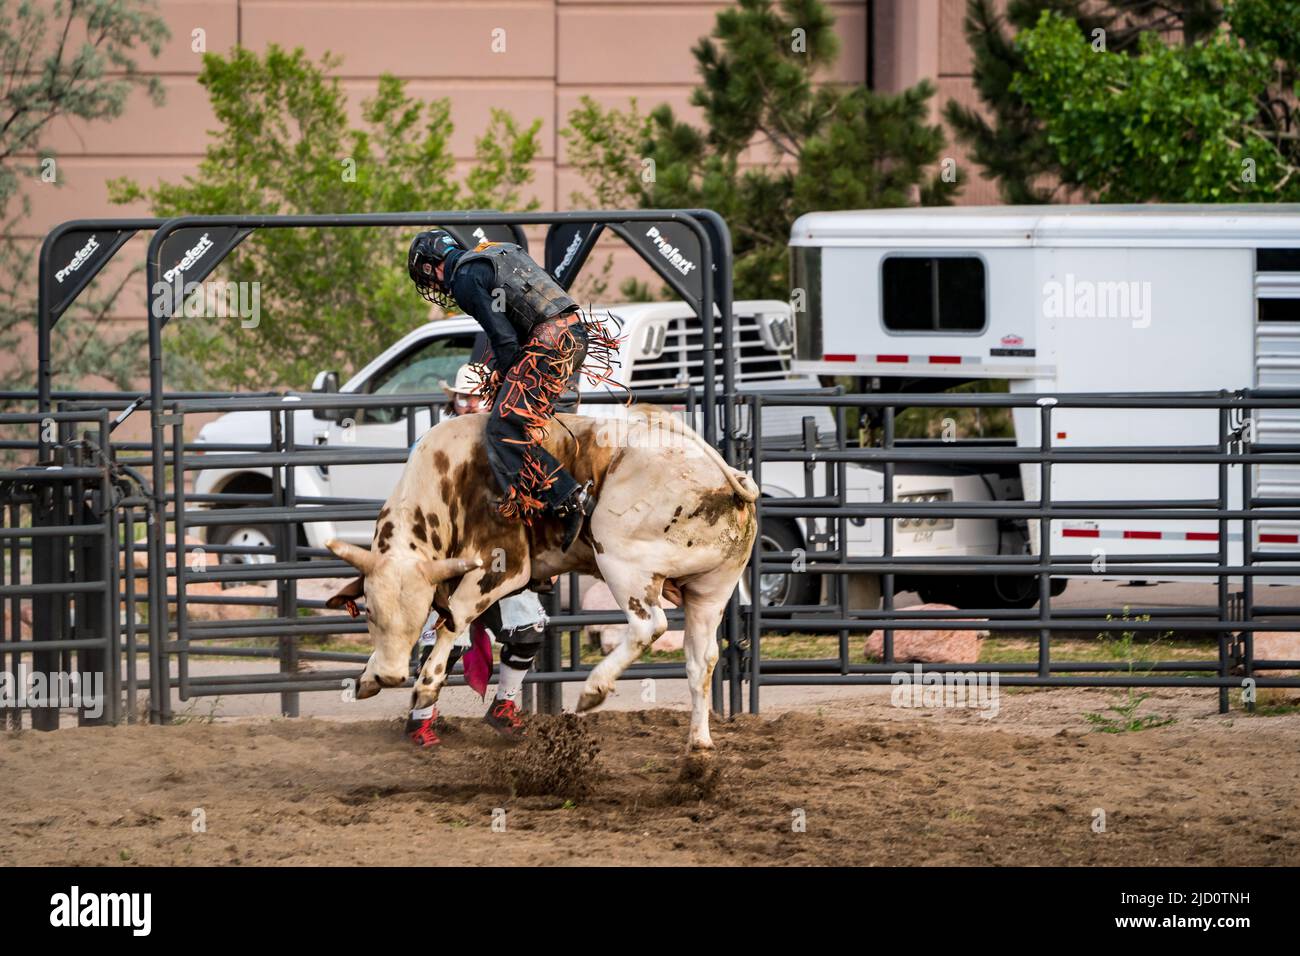 Bull riding at Rodeo in Colorado Springs, Colorado Stock Photo